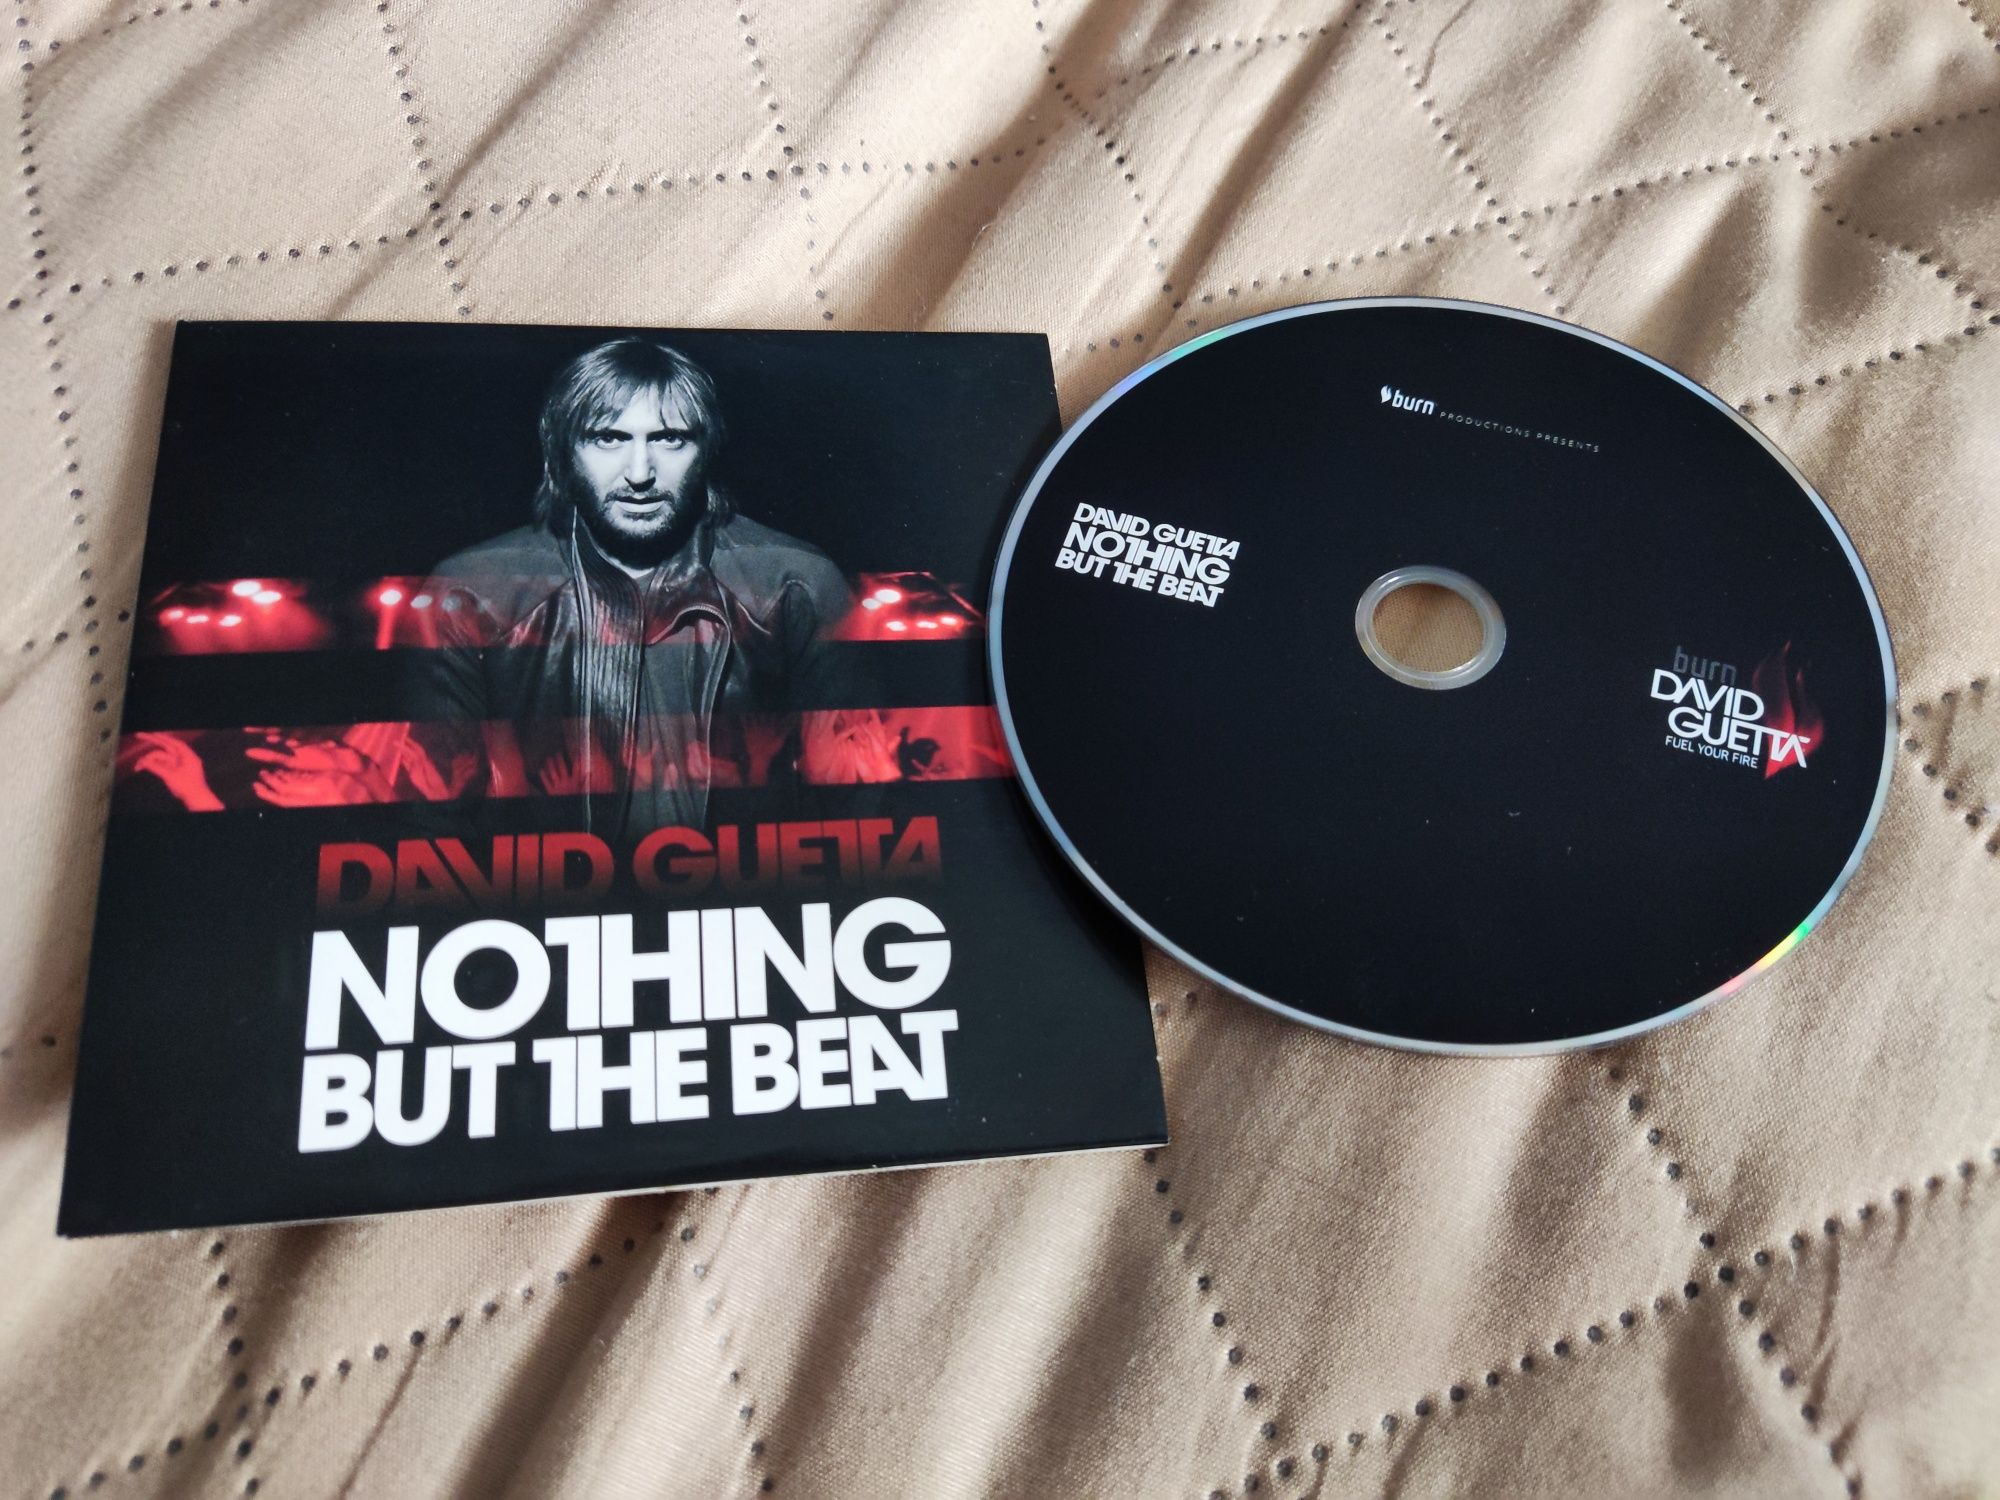 David Guetta "Nothing But the Beat" promo unikat